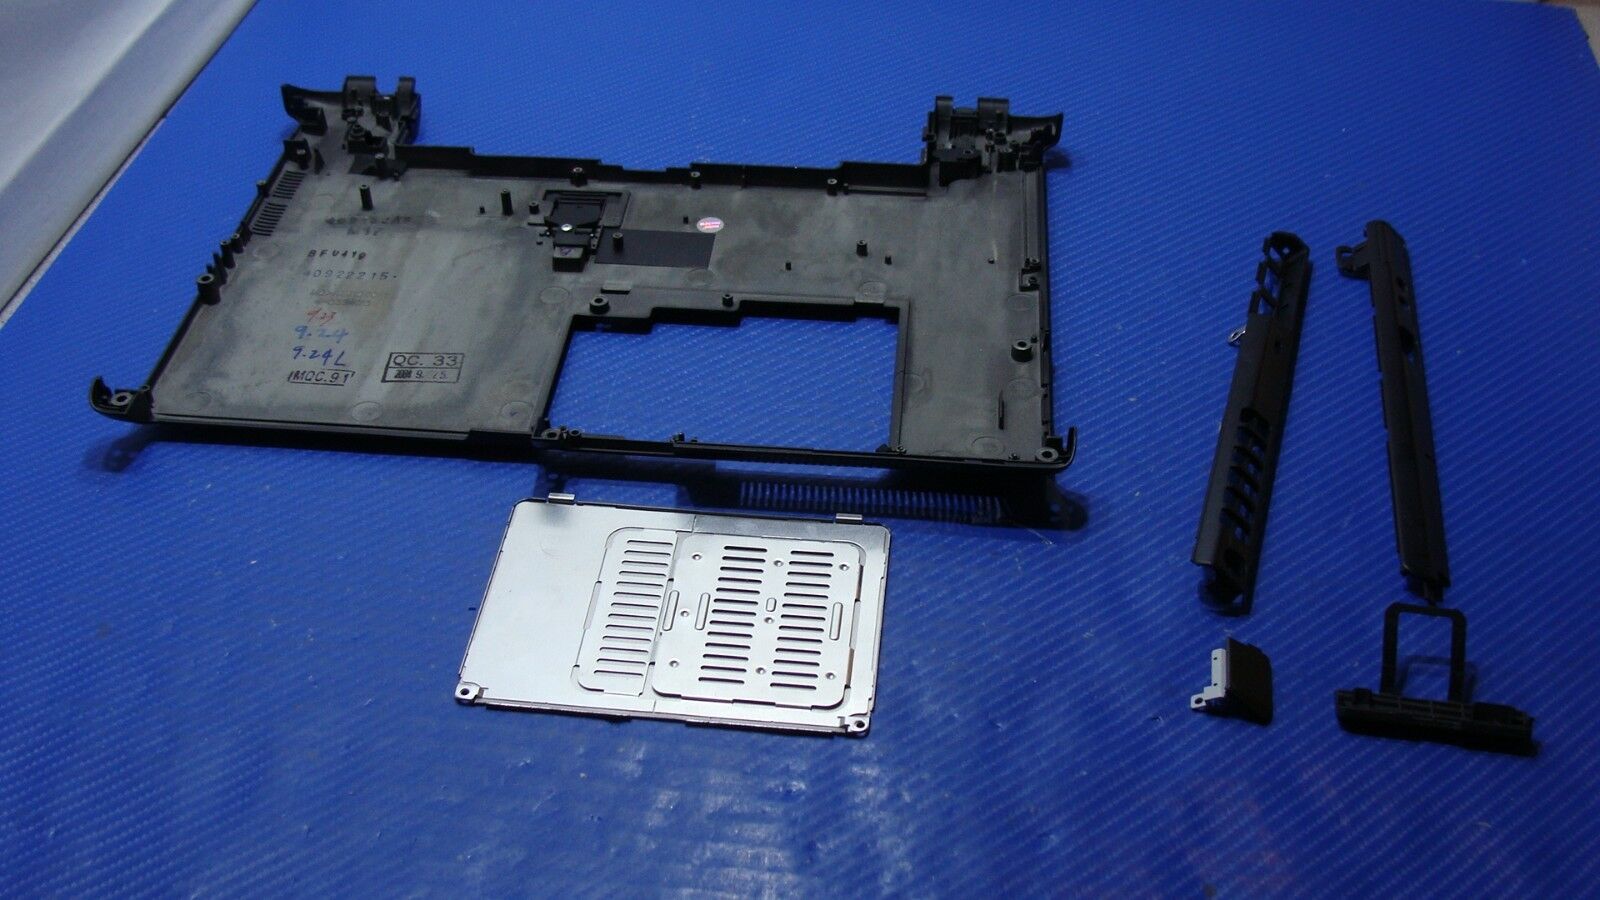 Sony VAIO 13.3 PCG-6D1L VGN-S260 OEM Laptop Bottom Case w/Cover Door 4-683-178